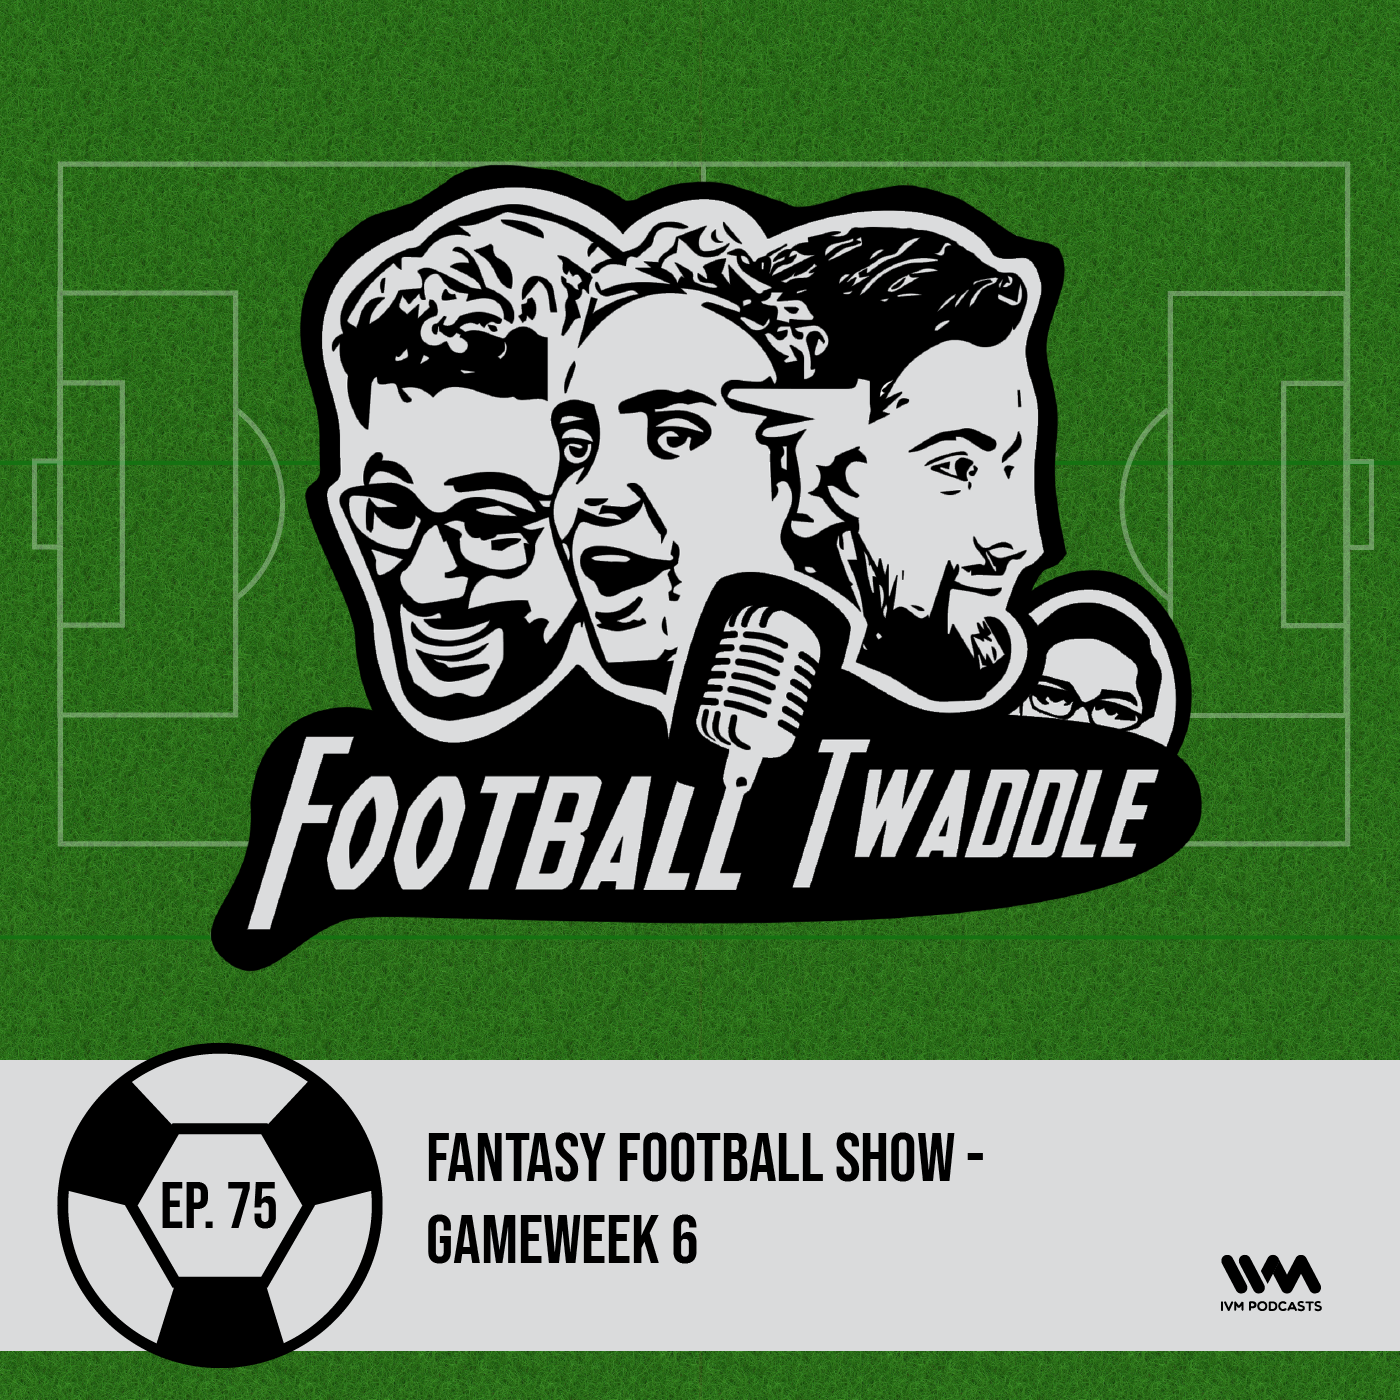 Fantasy Football Show - Gameweek 6